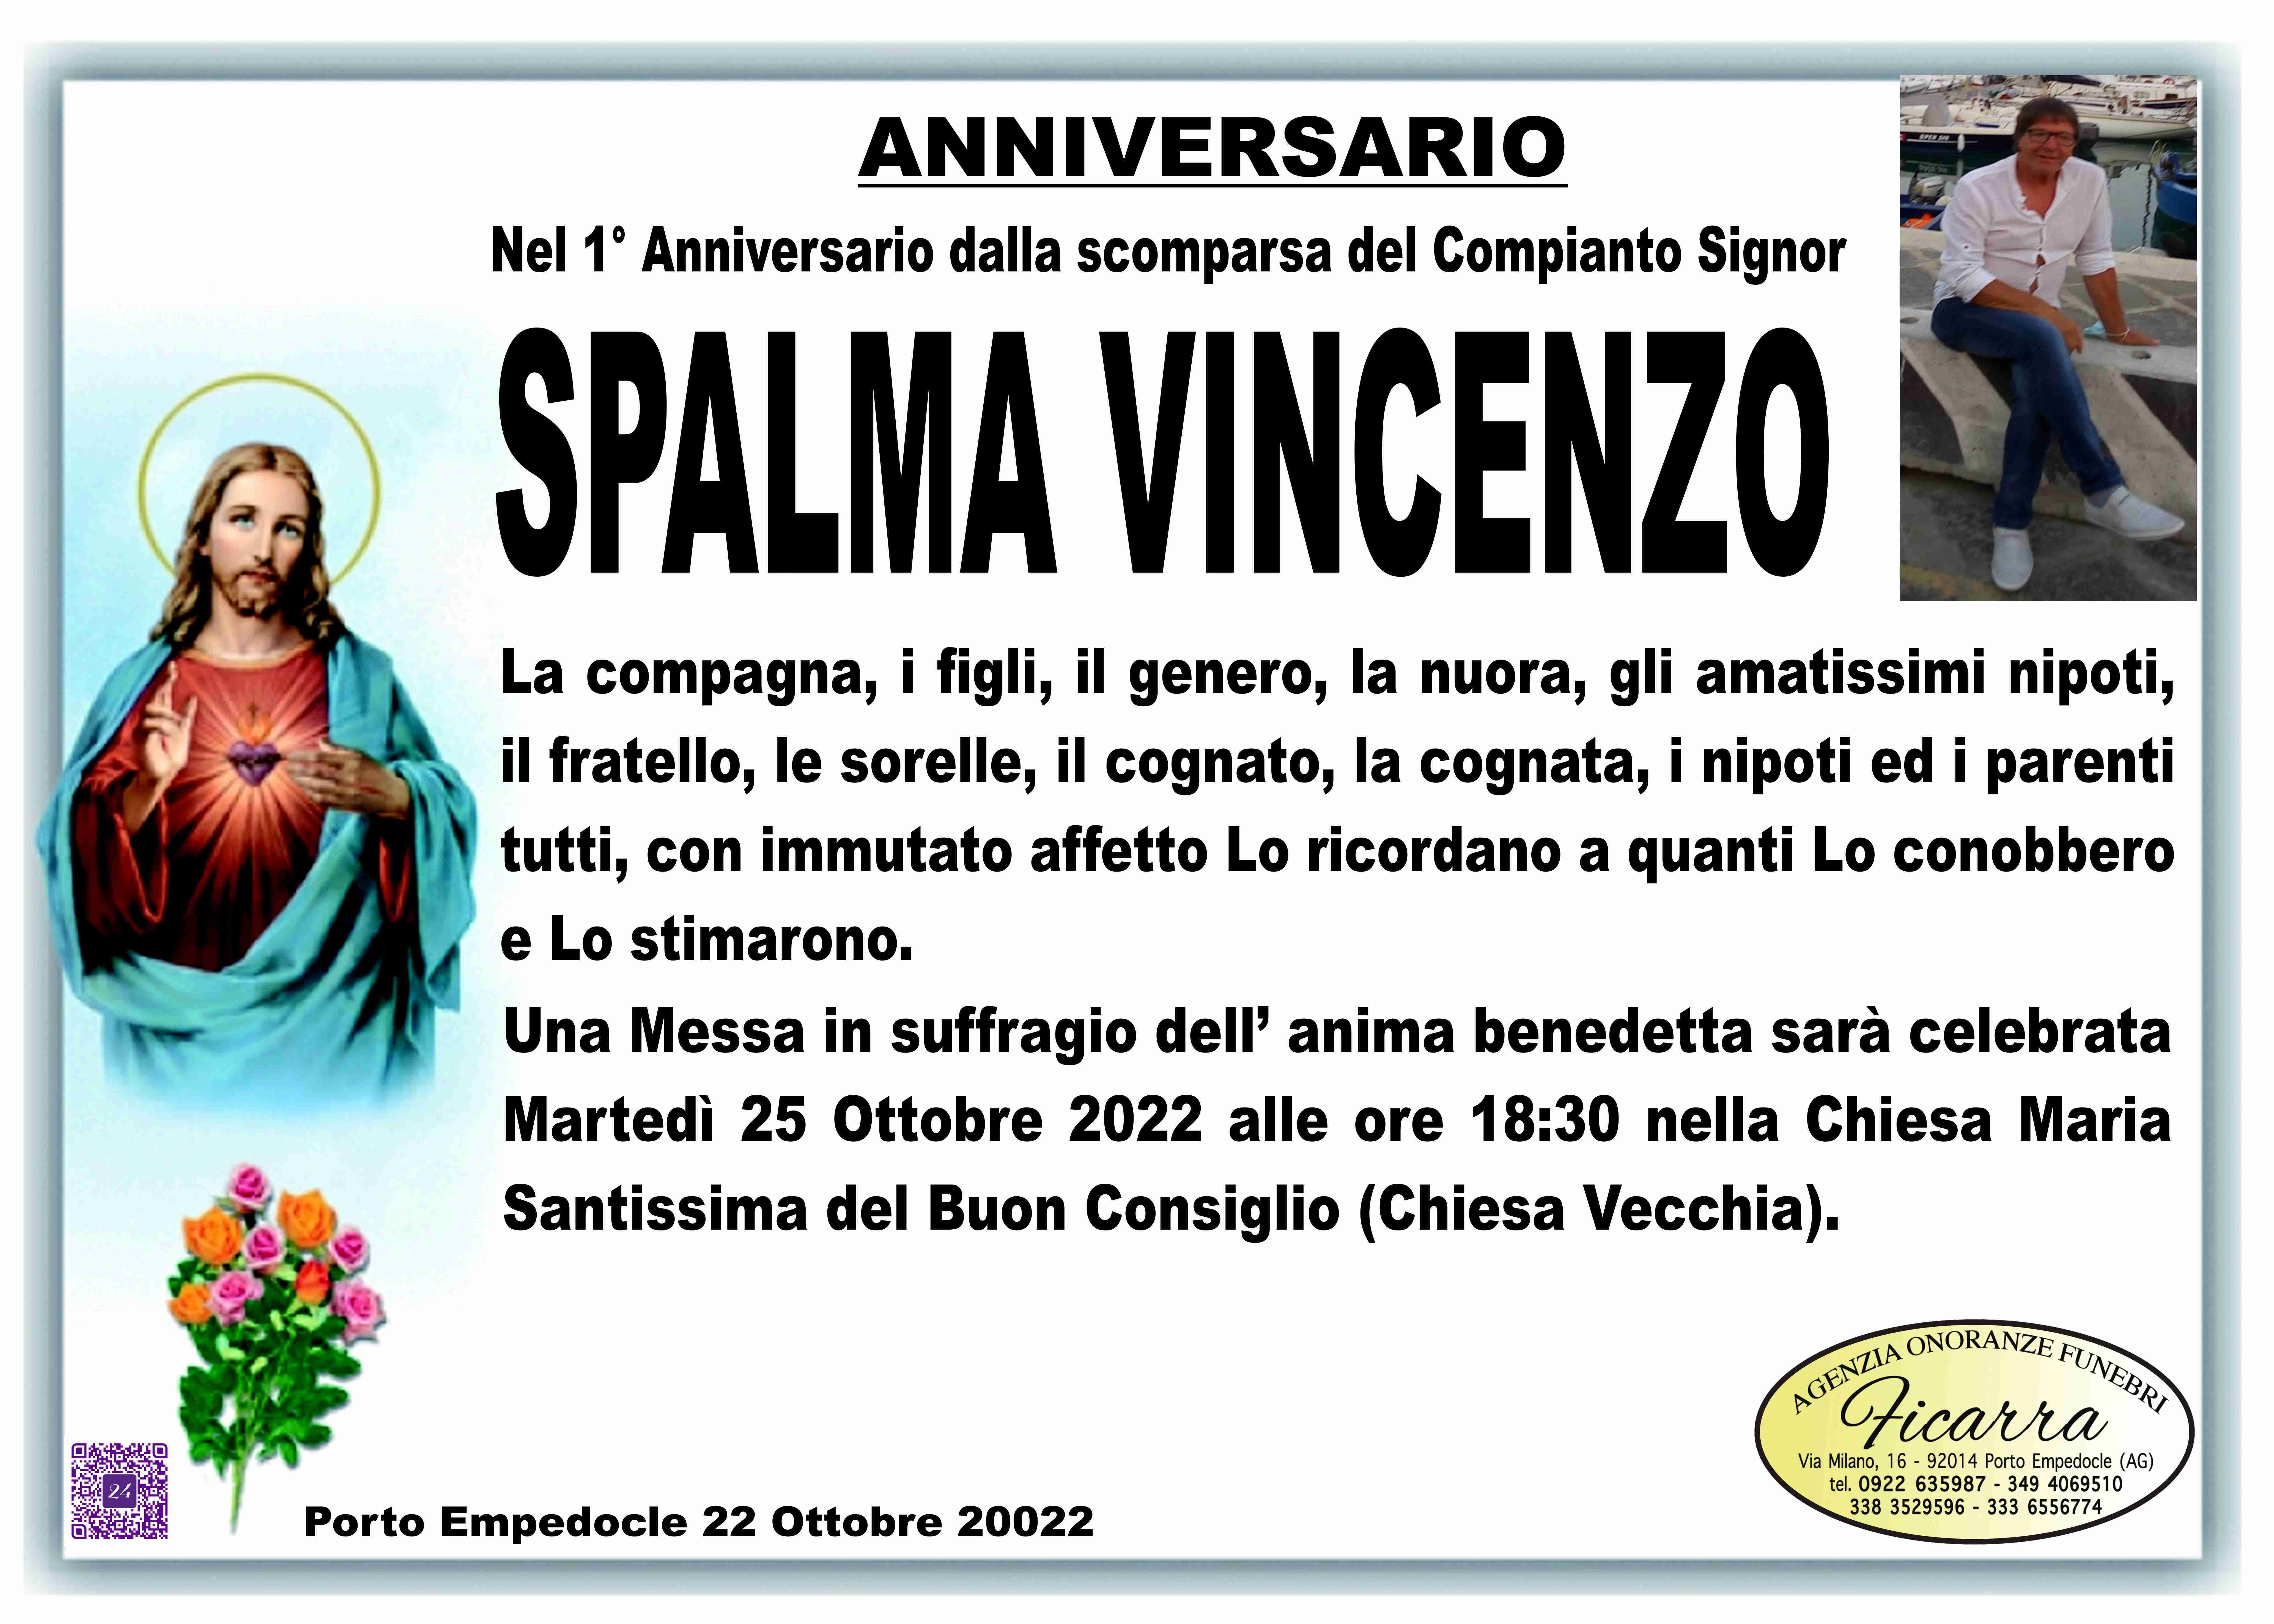 Vincenzo Spalma